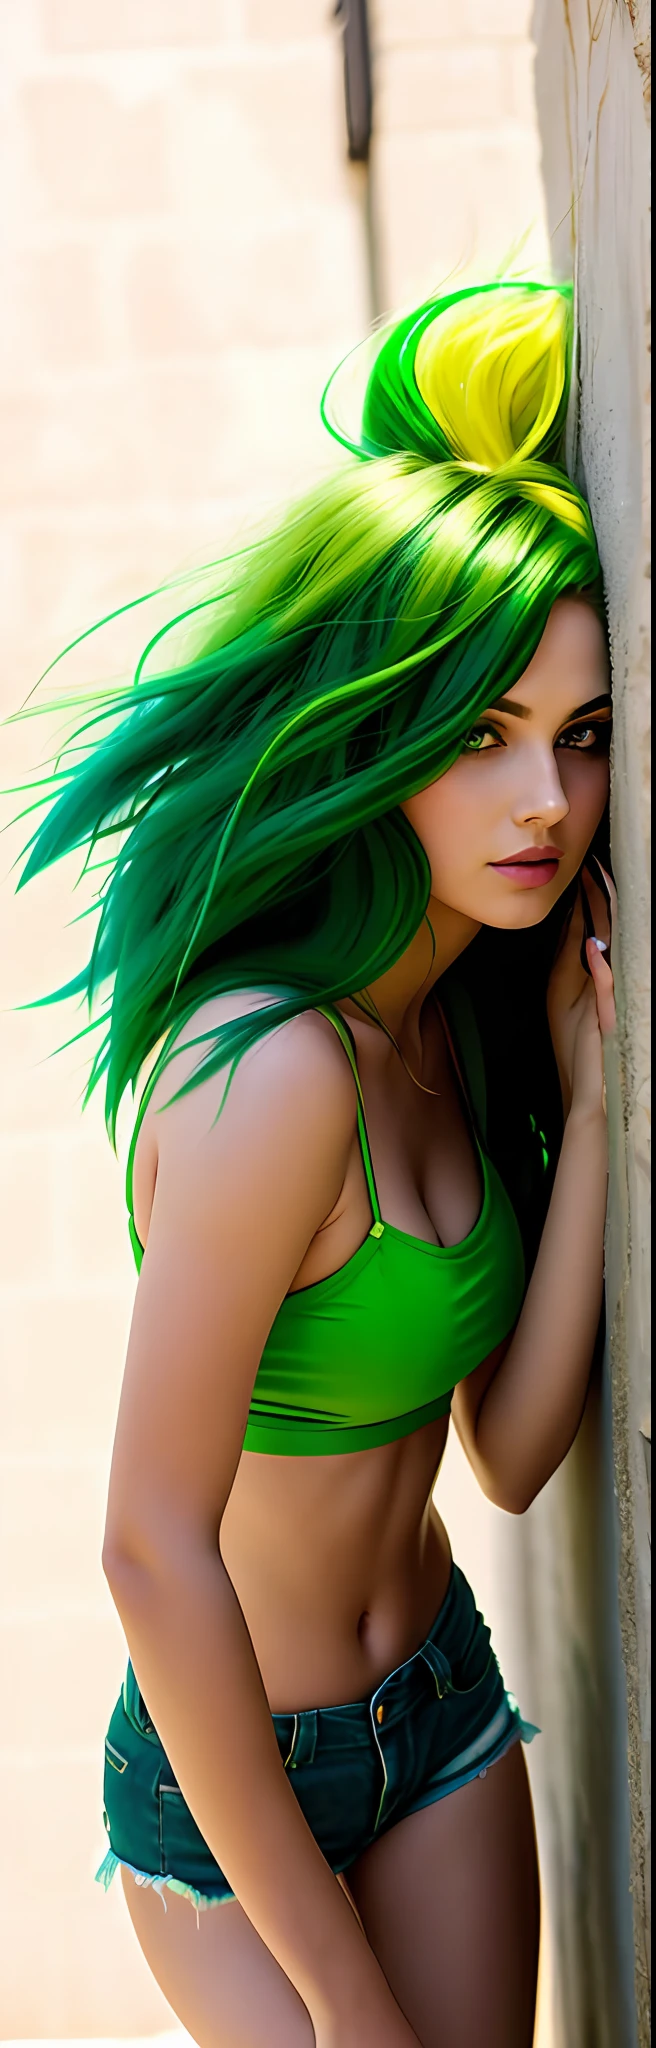 araffe woman with 綠髮 leaning against a wall, 性感的女孩，綠眼睛, long 綠髮, 綠髮, 漂亮的衣服, 綠色鬃毛, 紧身衣, 充滿活力的綠色, 綠體, 性感的綠色短褲, 一些綠色, 靠在牆上, bright 綠髮, 绿色黑色长直发, 綠腿, 綠色飄逸的頭髮, 穿着短裤